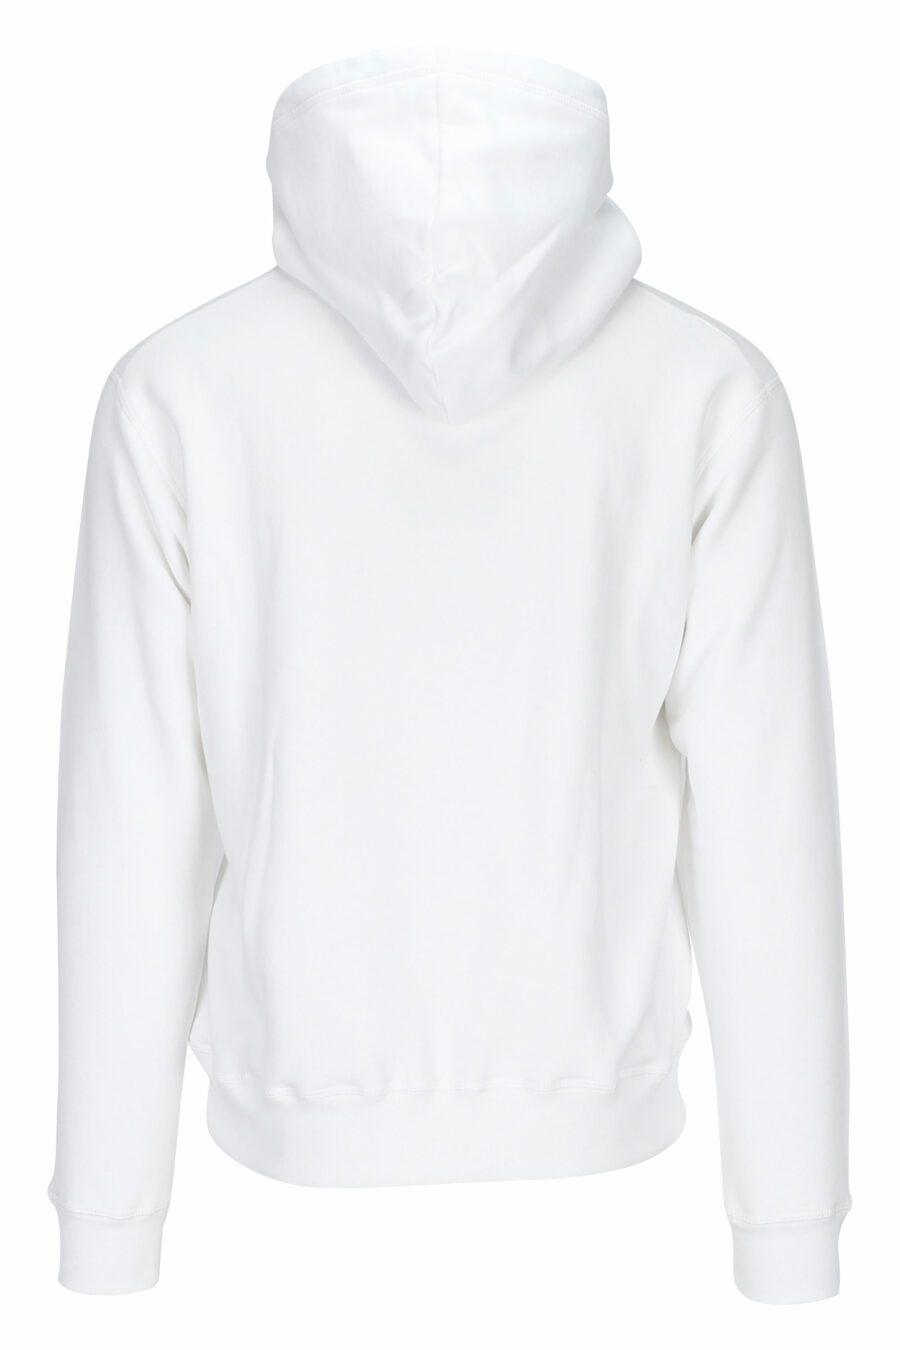 White hooded sweatshirt with square "icon" maxilogo - 8052134982570 1